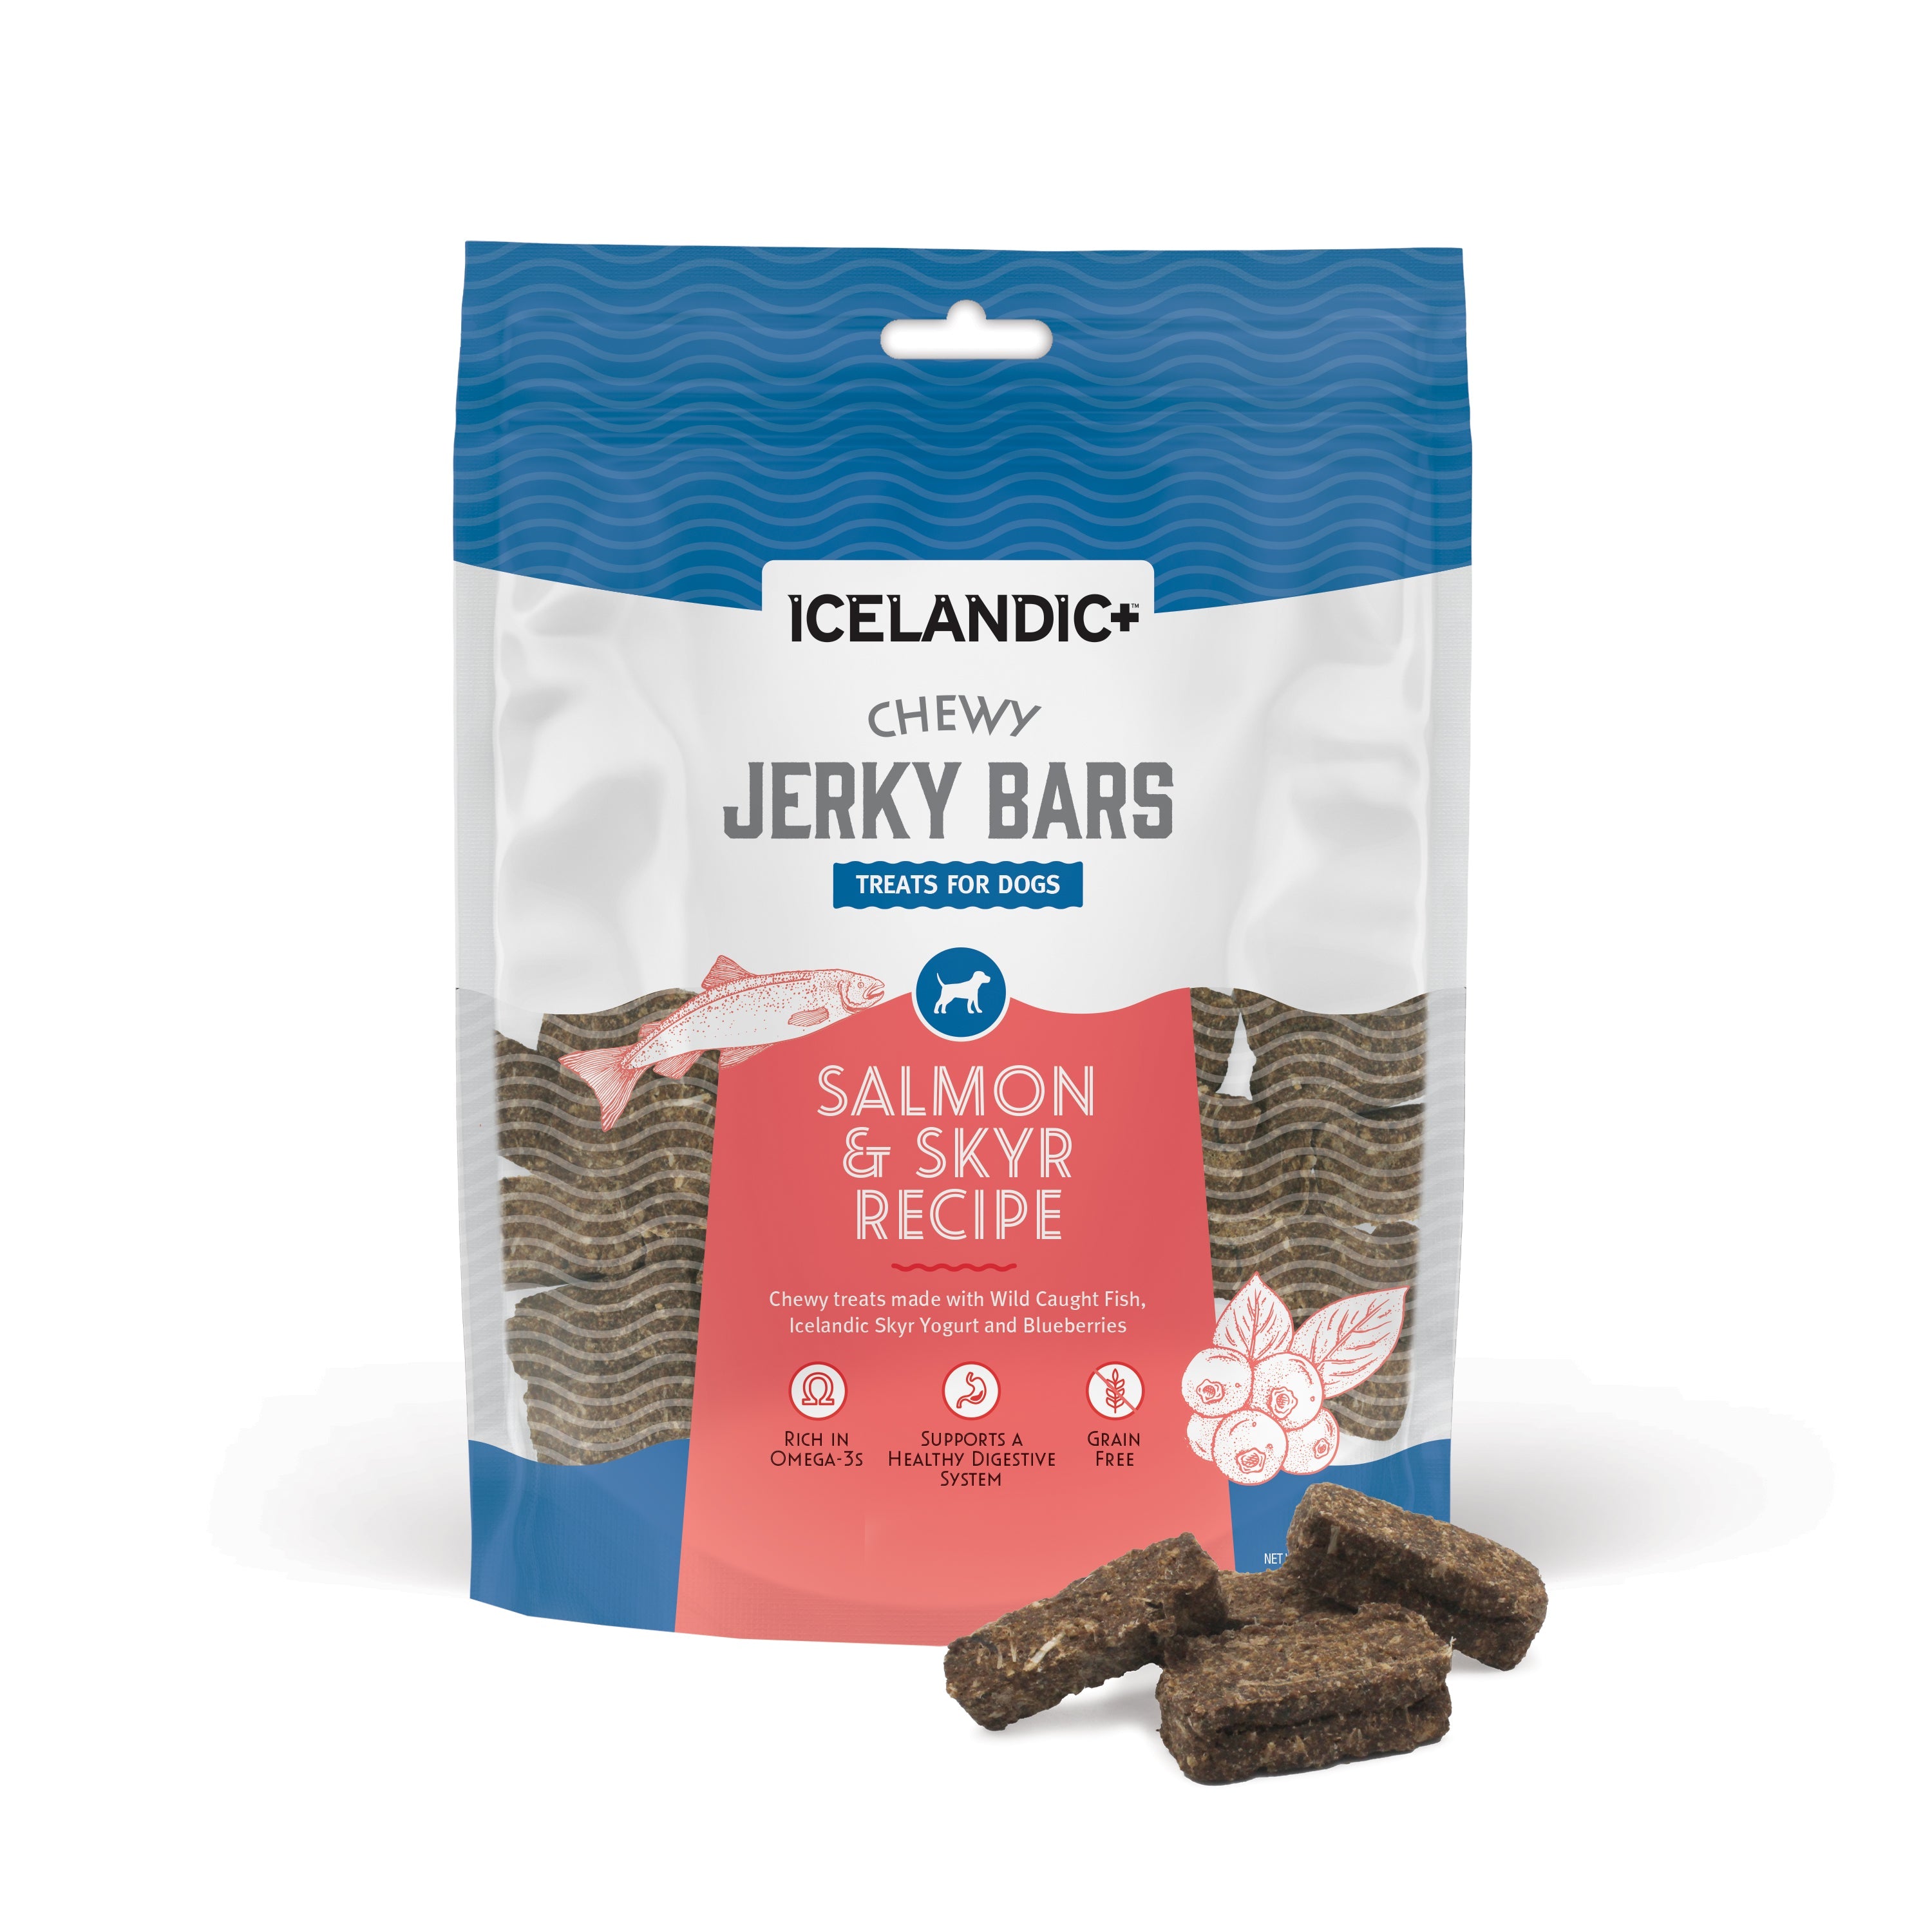 Icelandic+ Jerky Bars Salmon & Skyr Recipe Soft Dog Treats, 2.5oz